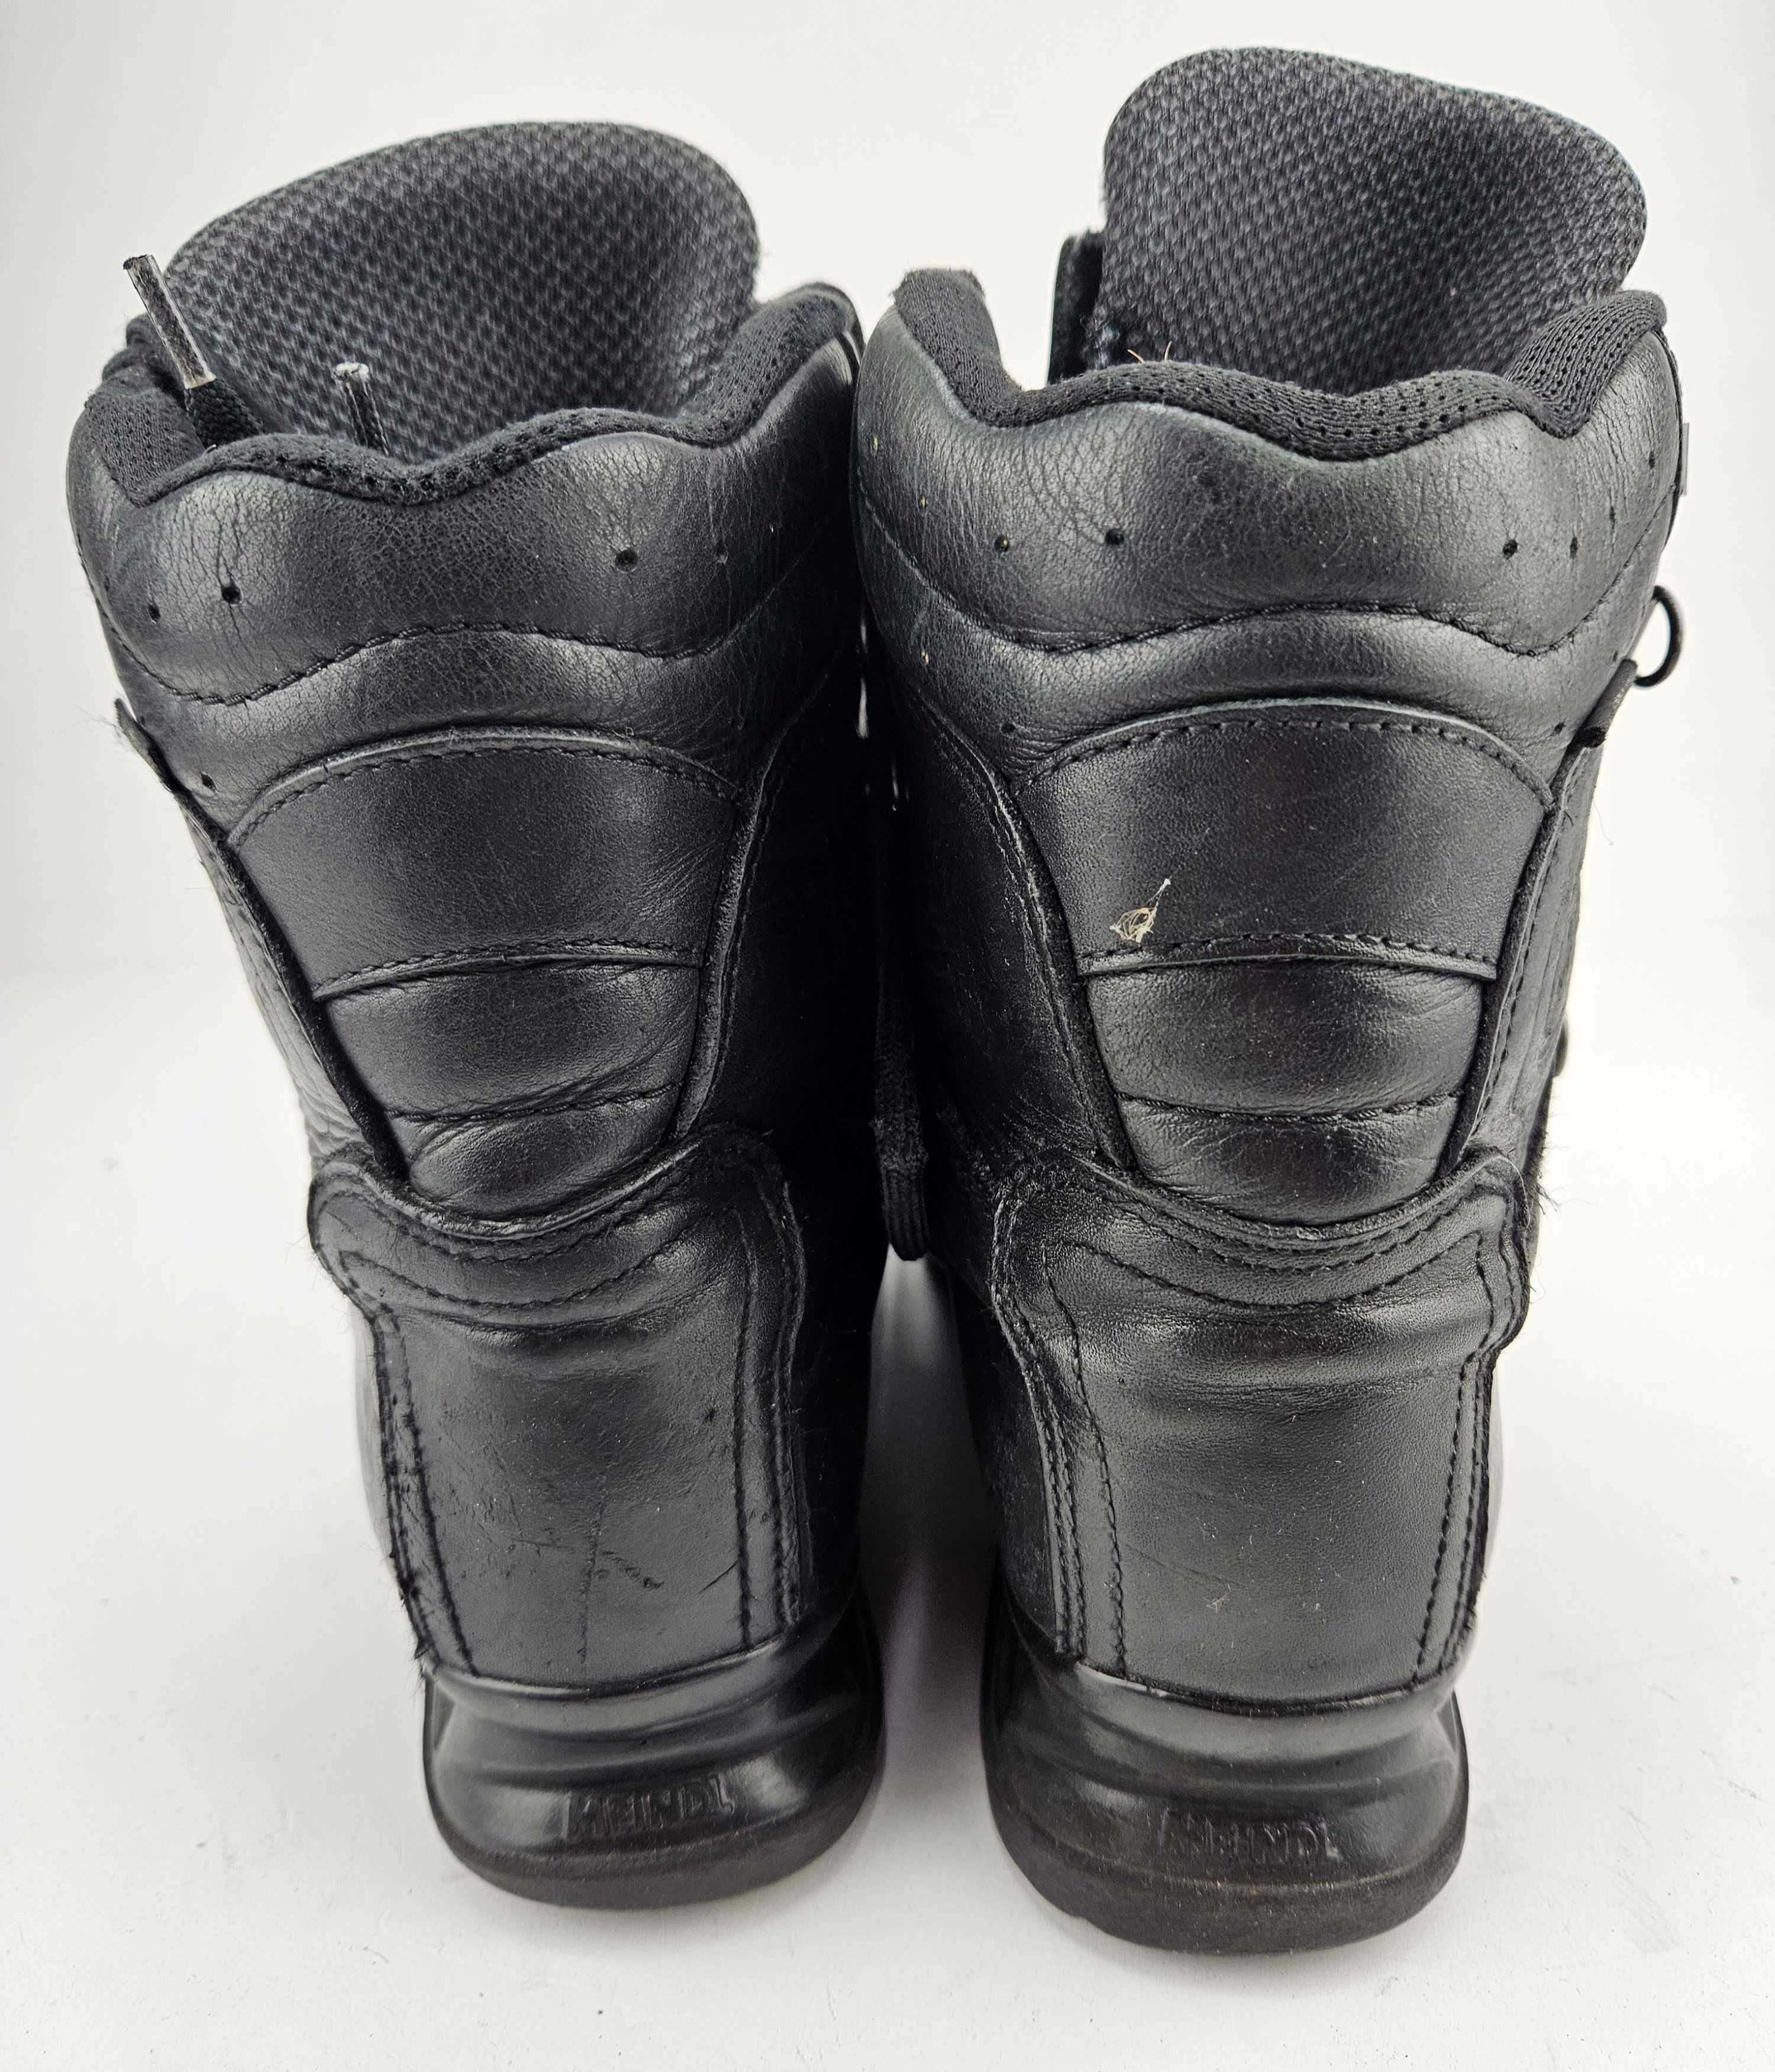 Buty wojskowe Meindl Combat Extreme r. 41,5